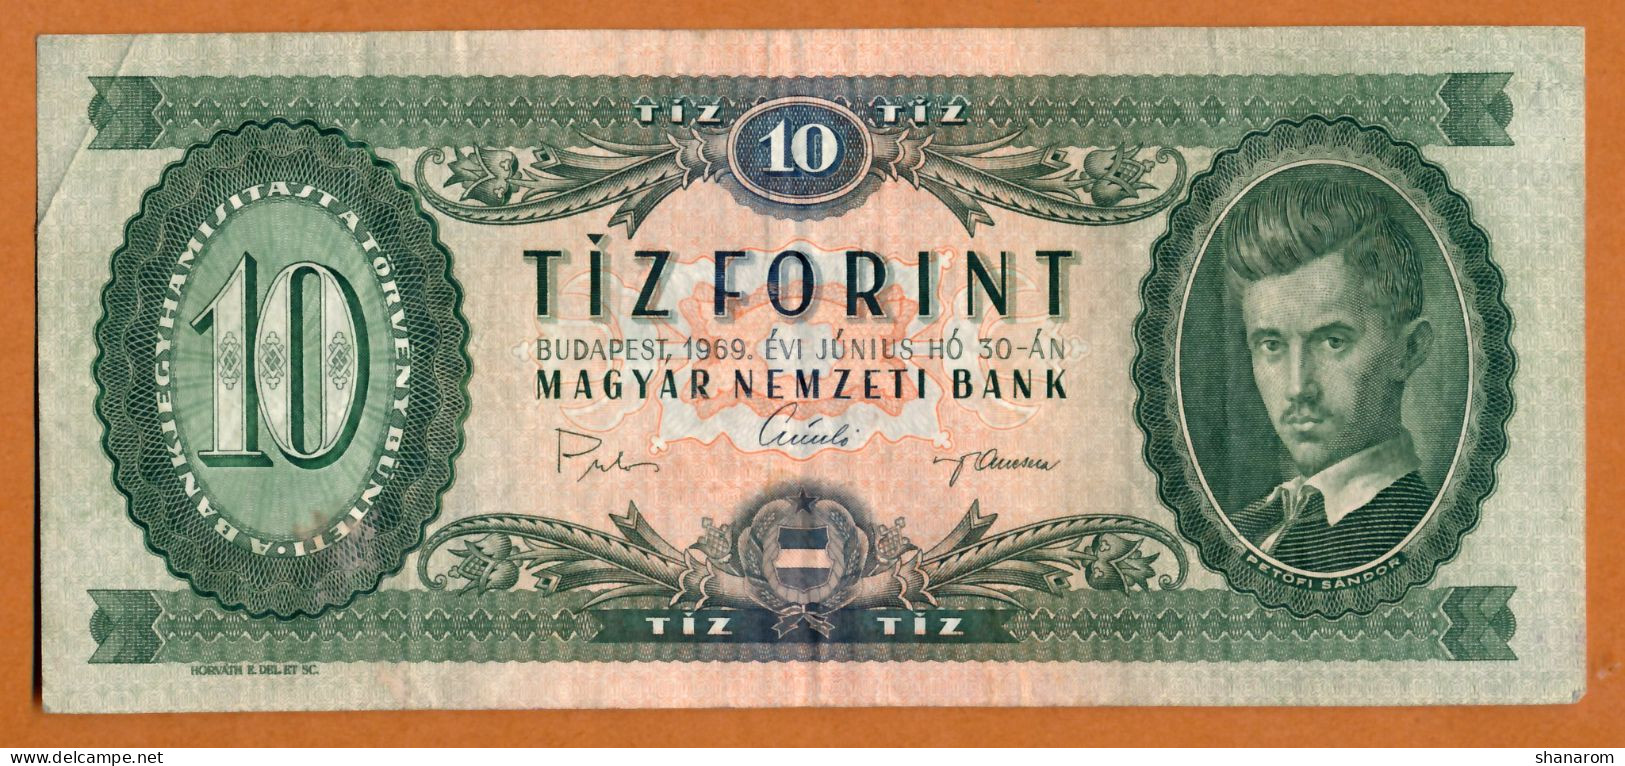 1969 // HONGRIE // MAGYAR NEMZETI BANK // TIZ FORINT // VF-TTB - Ungarn